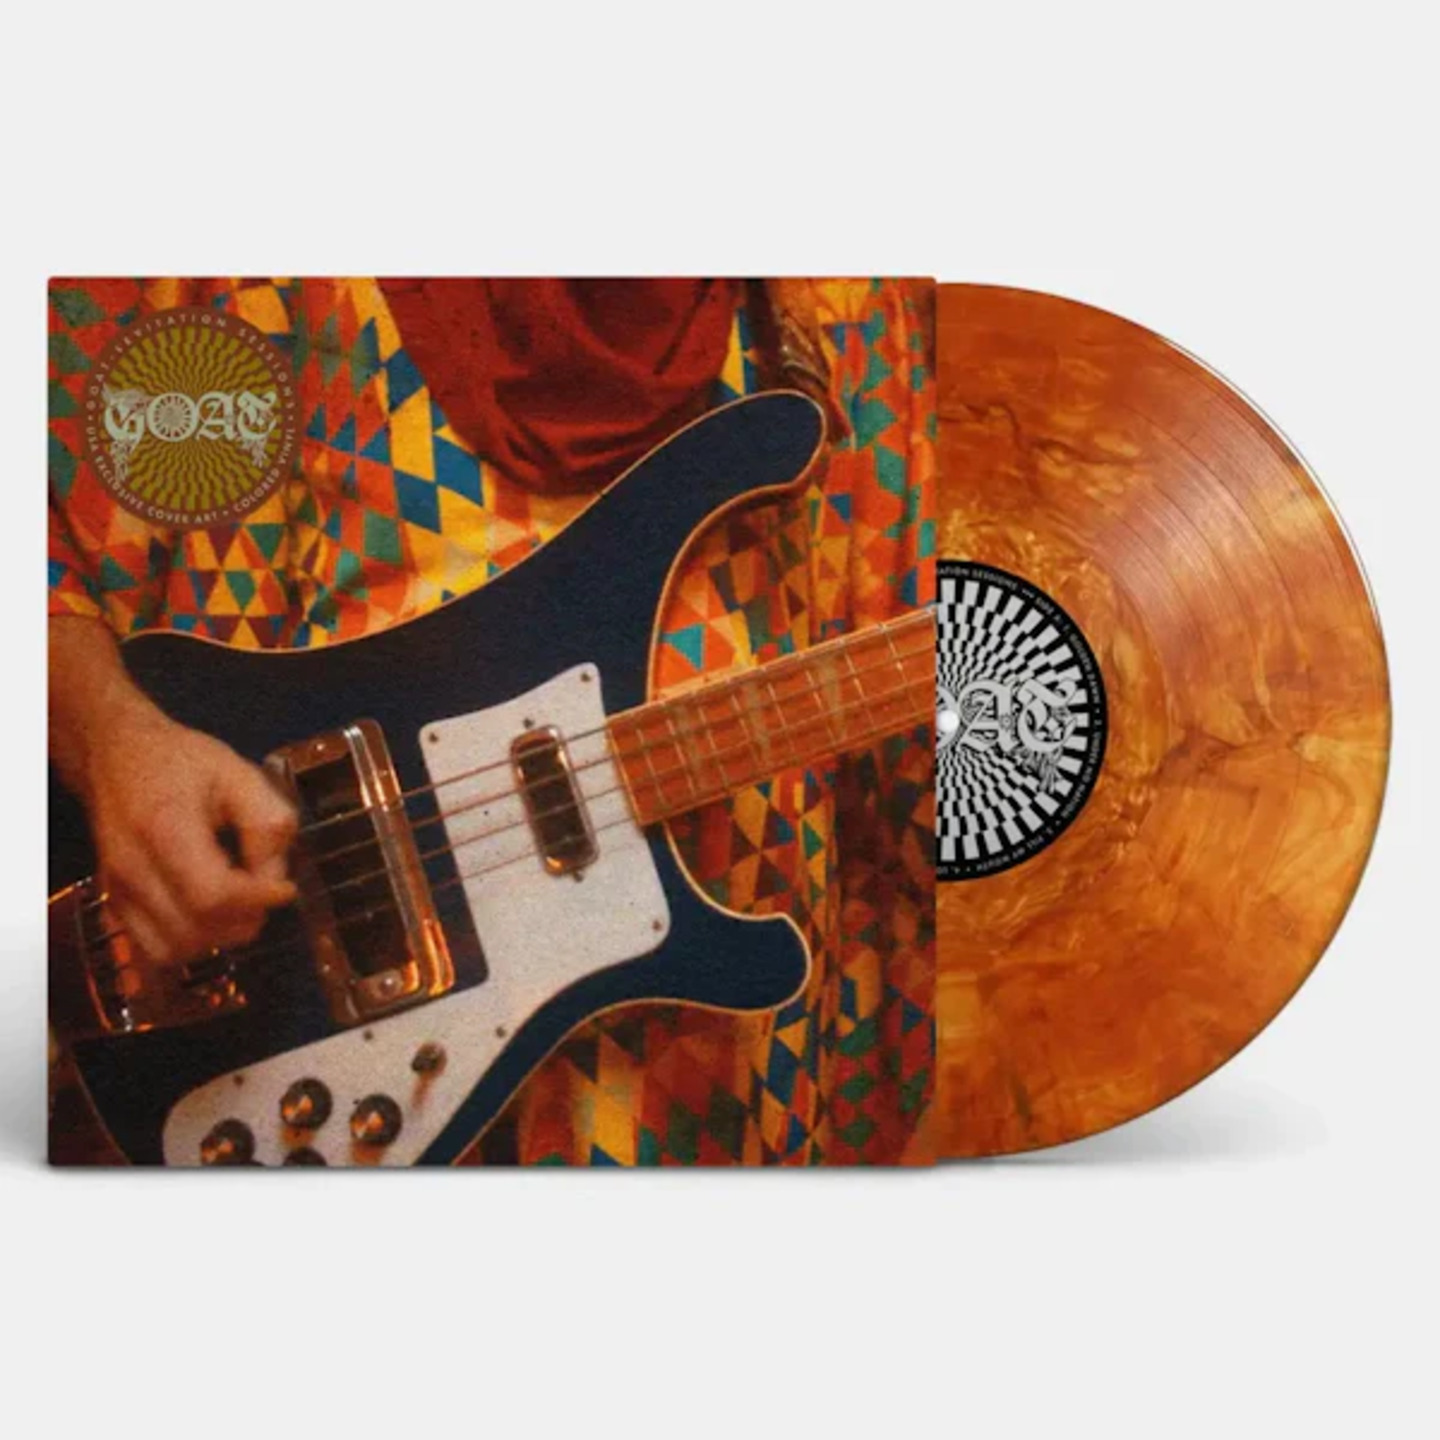 GOAT - Levitation Sessions LP (USA Cover Art / Copper vinyl)